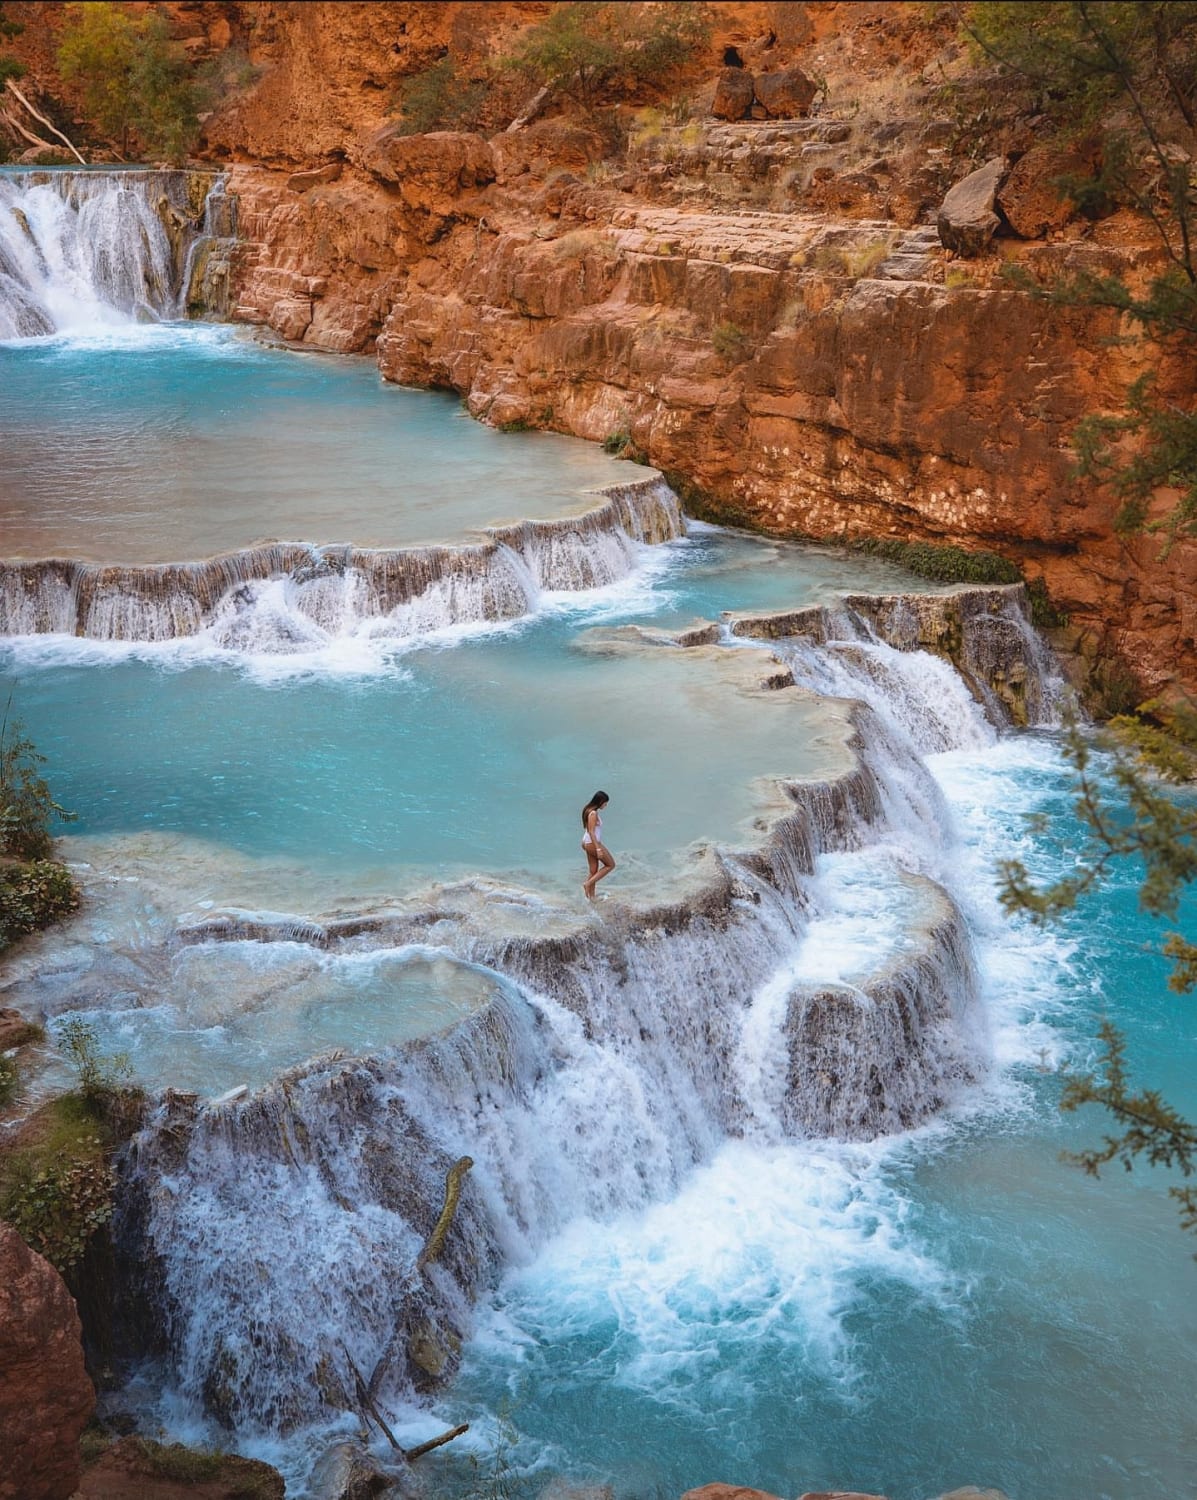 These waterfalls in Havasupai, Arizona